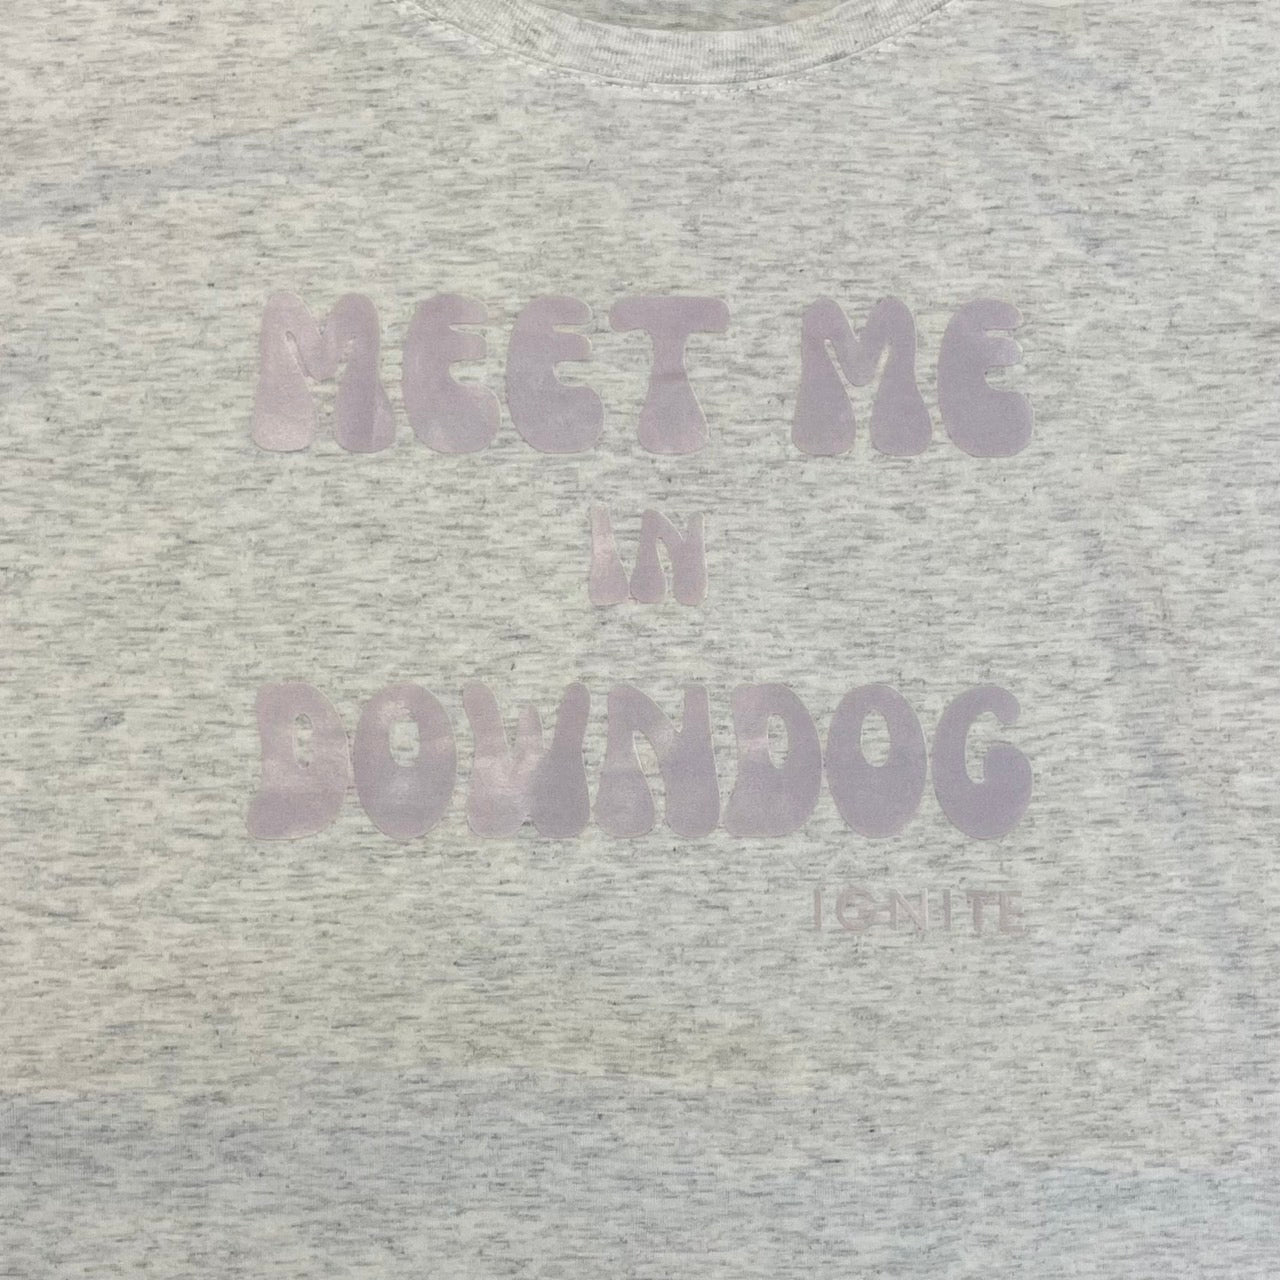 MEET ME IN DOWNDOG T-shirt